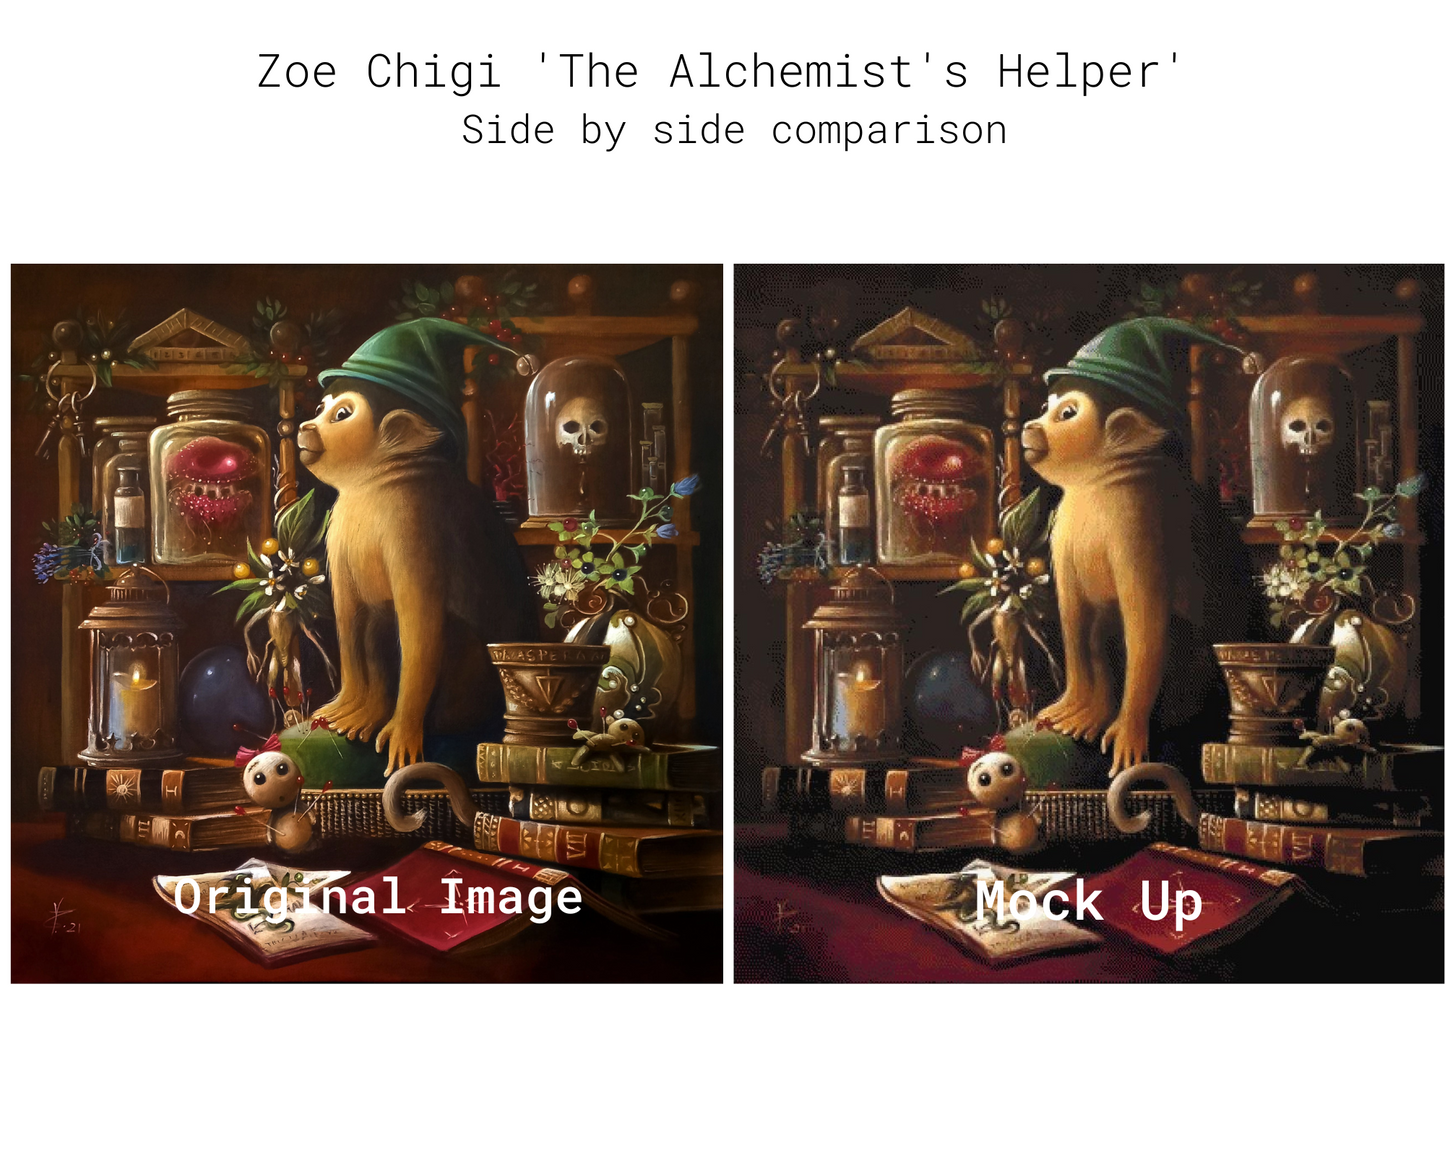 The Alchemist's Helper